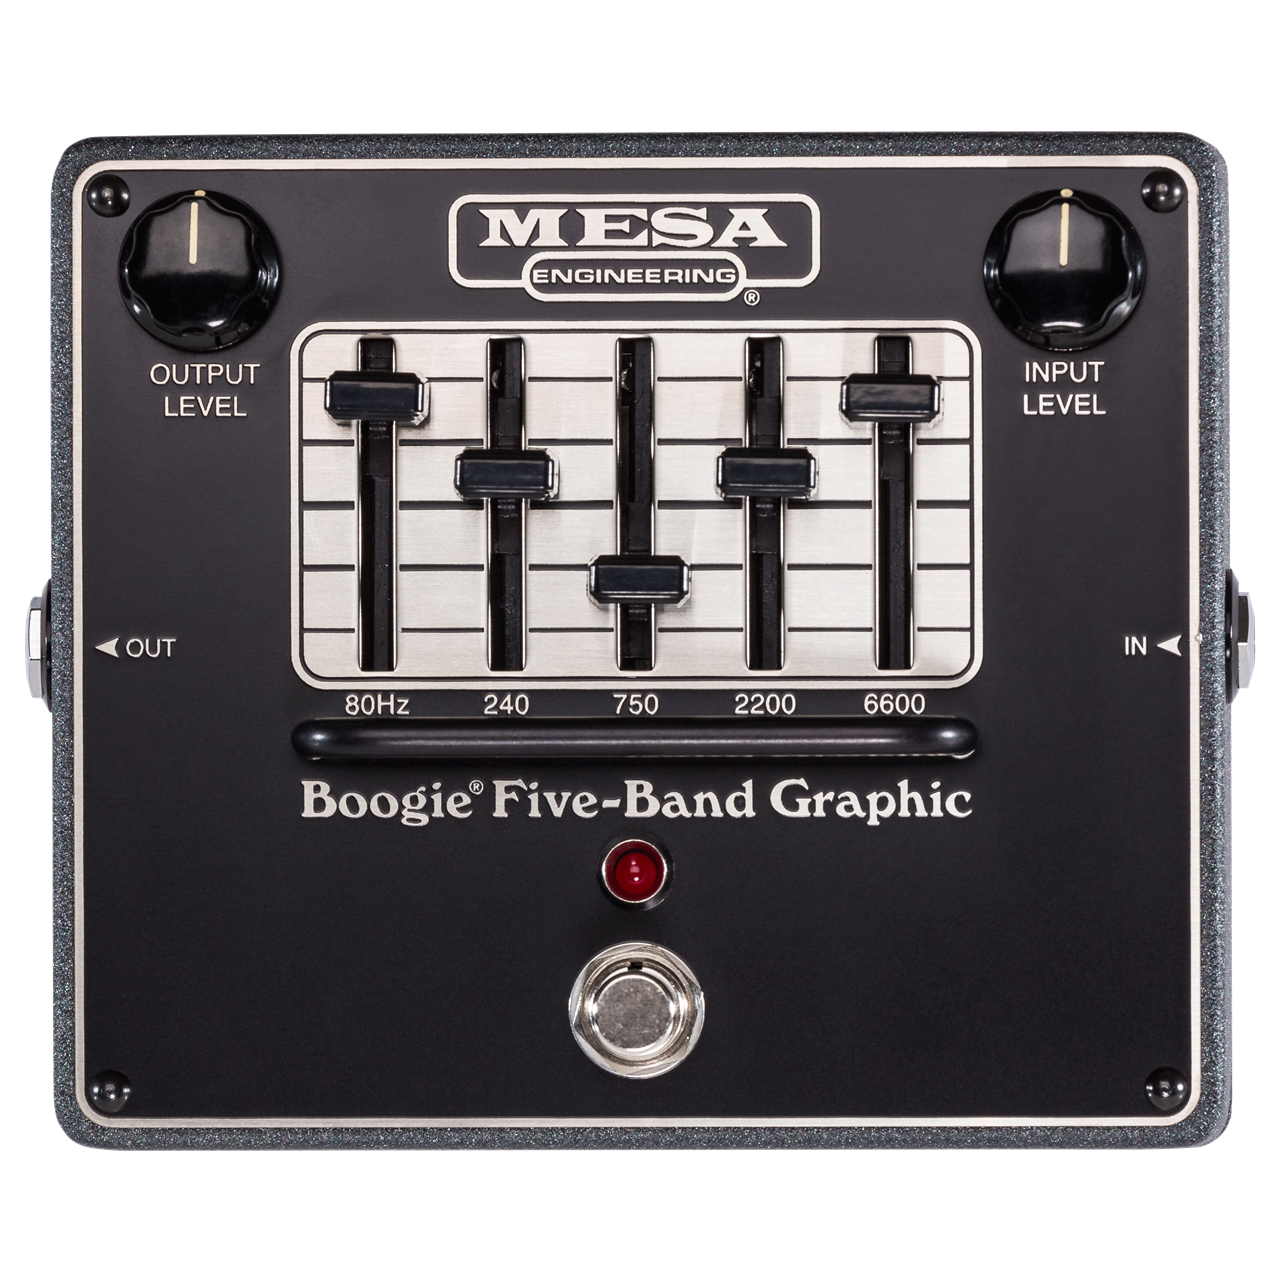 MESA/Boogie Five-Band Graphic EQ